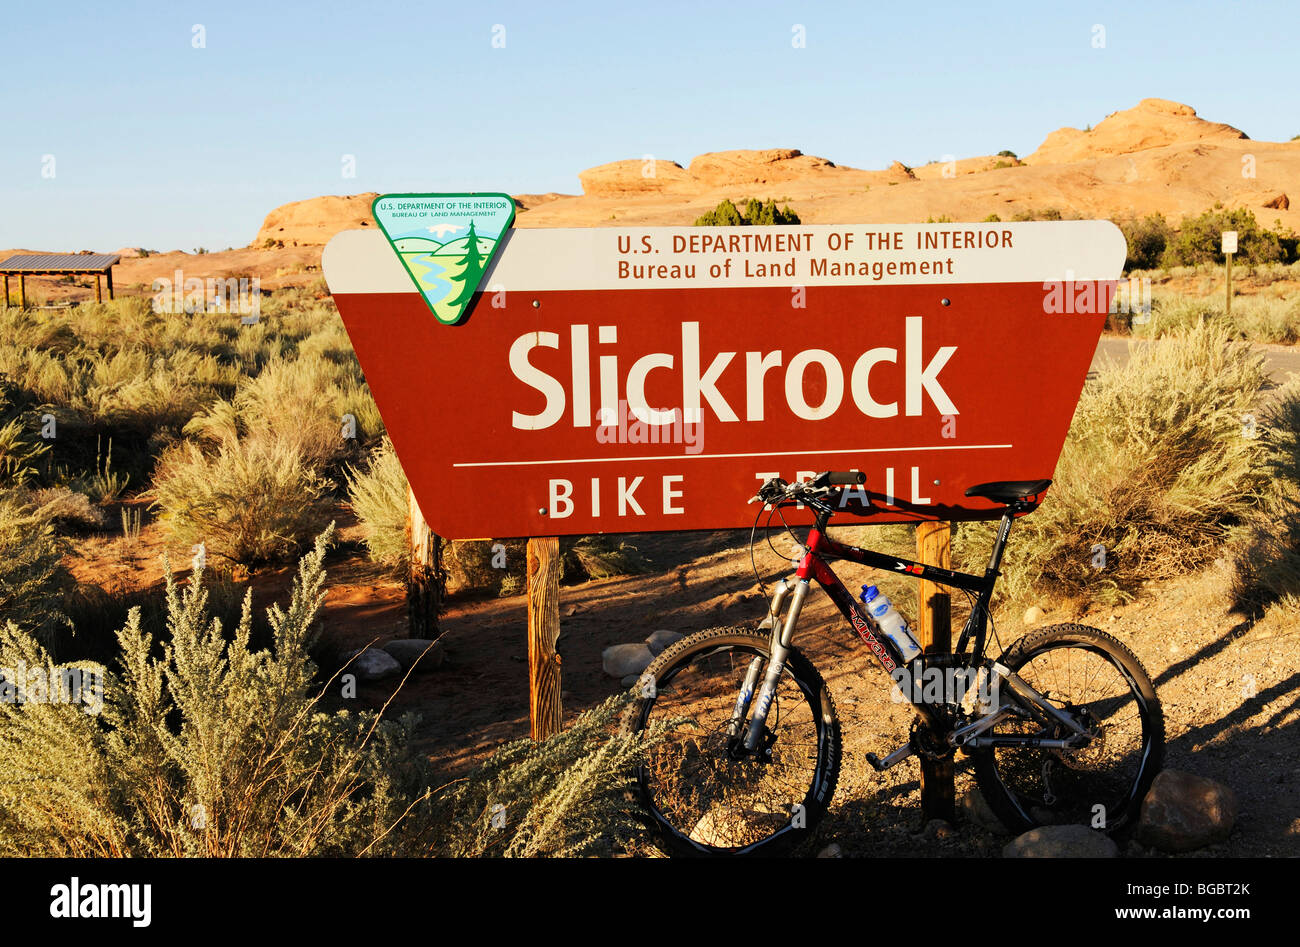 Slickrock Bike Trail, bouclier, Moab, Utah, USA Banque D'Images